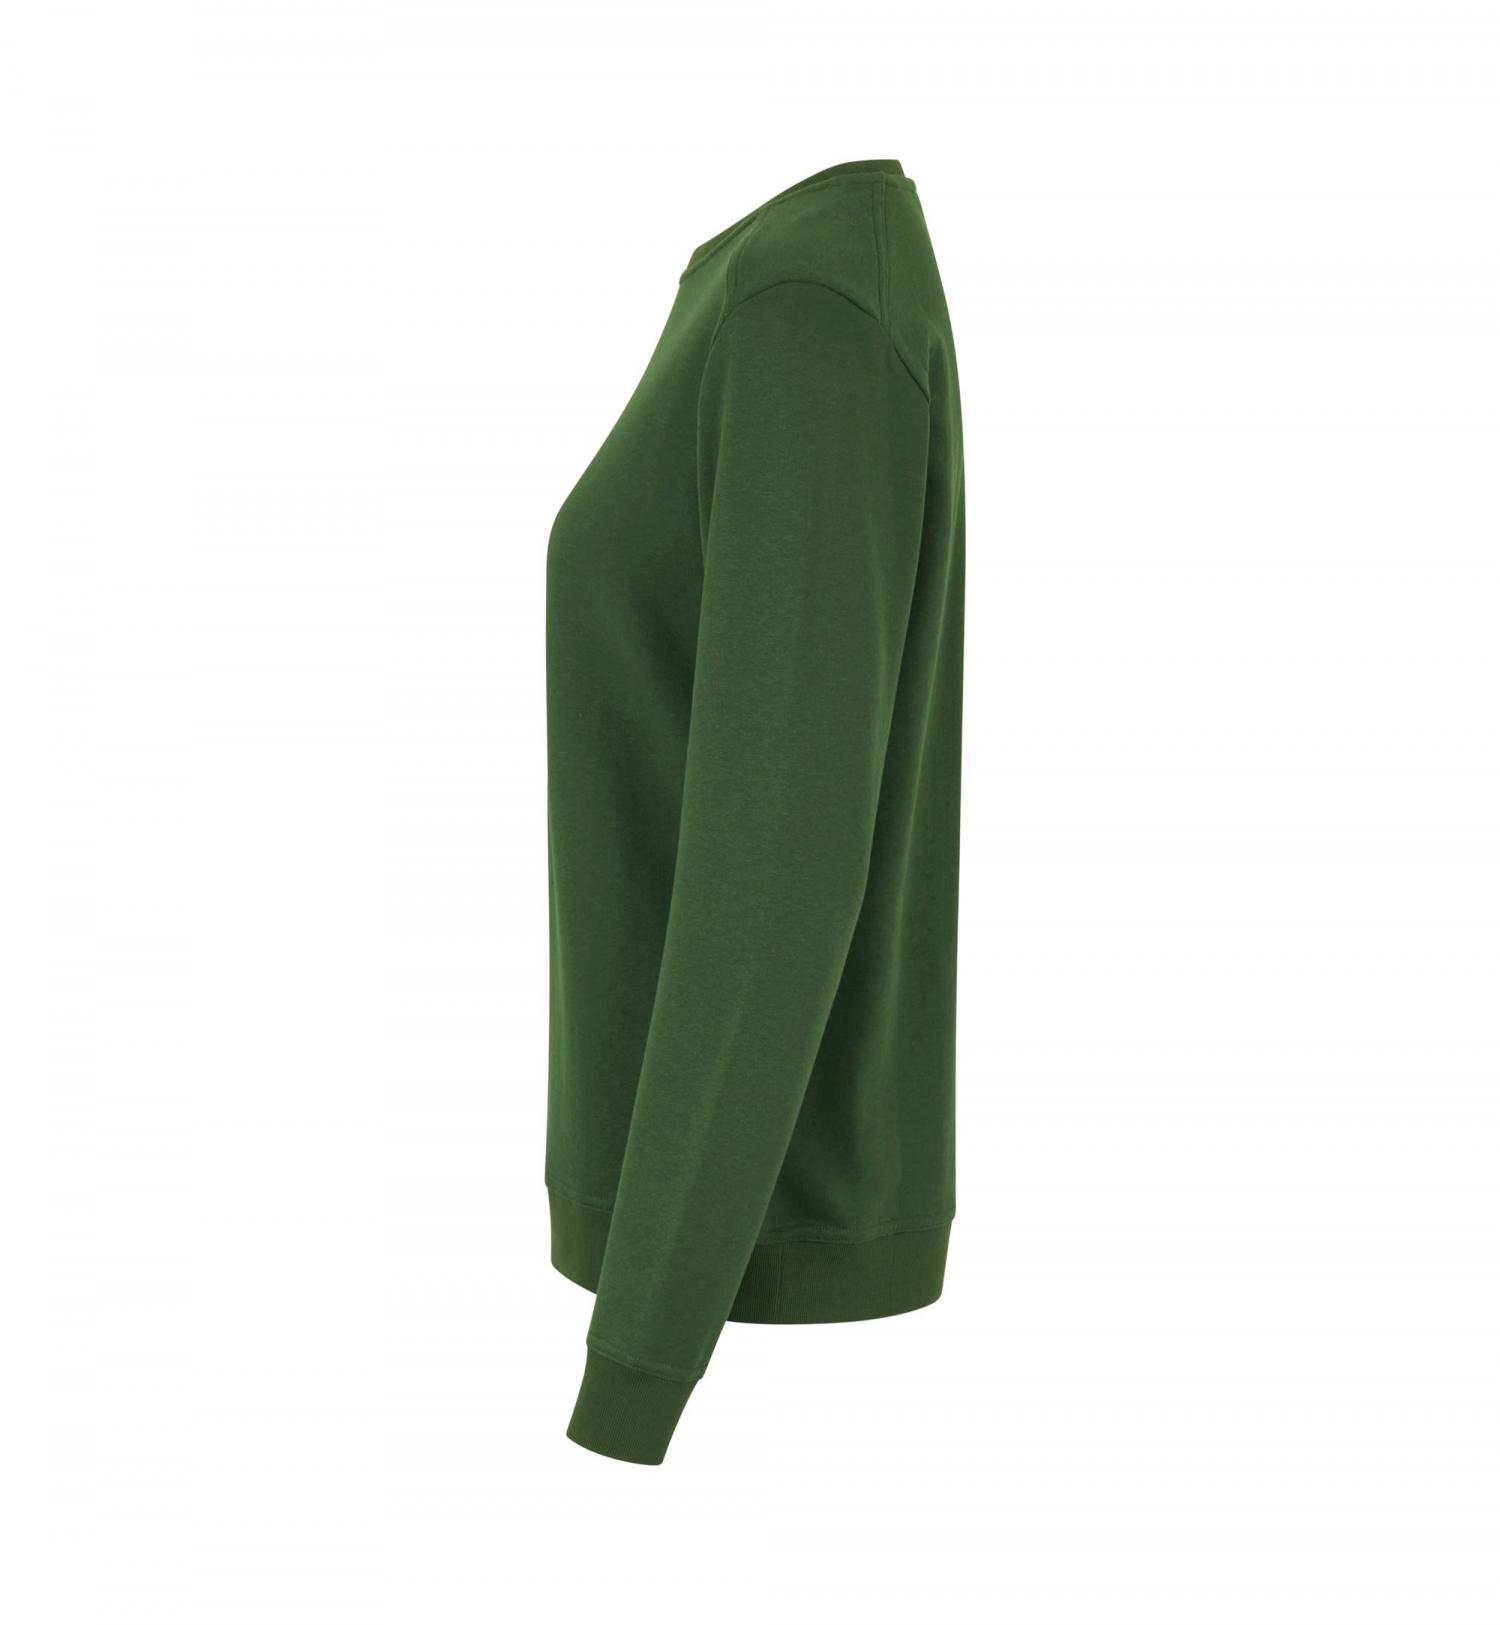 Bluza PRO Wear CARE | nieszczotkowana | damski 0381-Bottle green